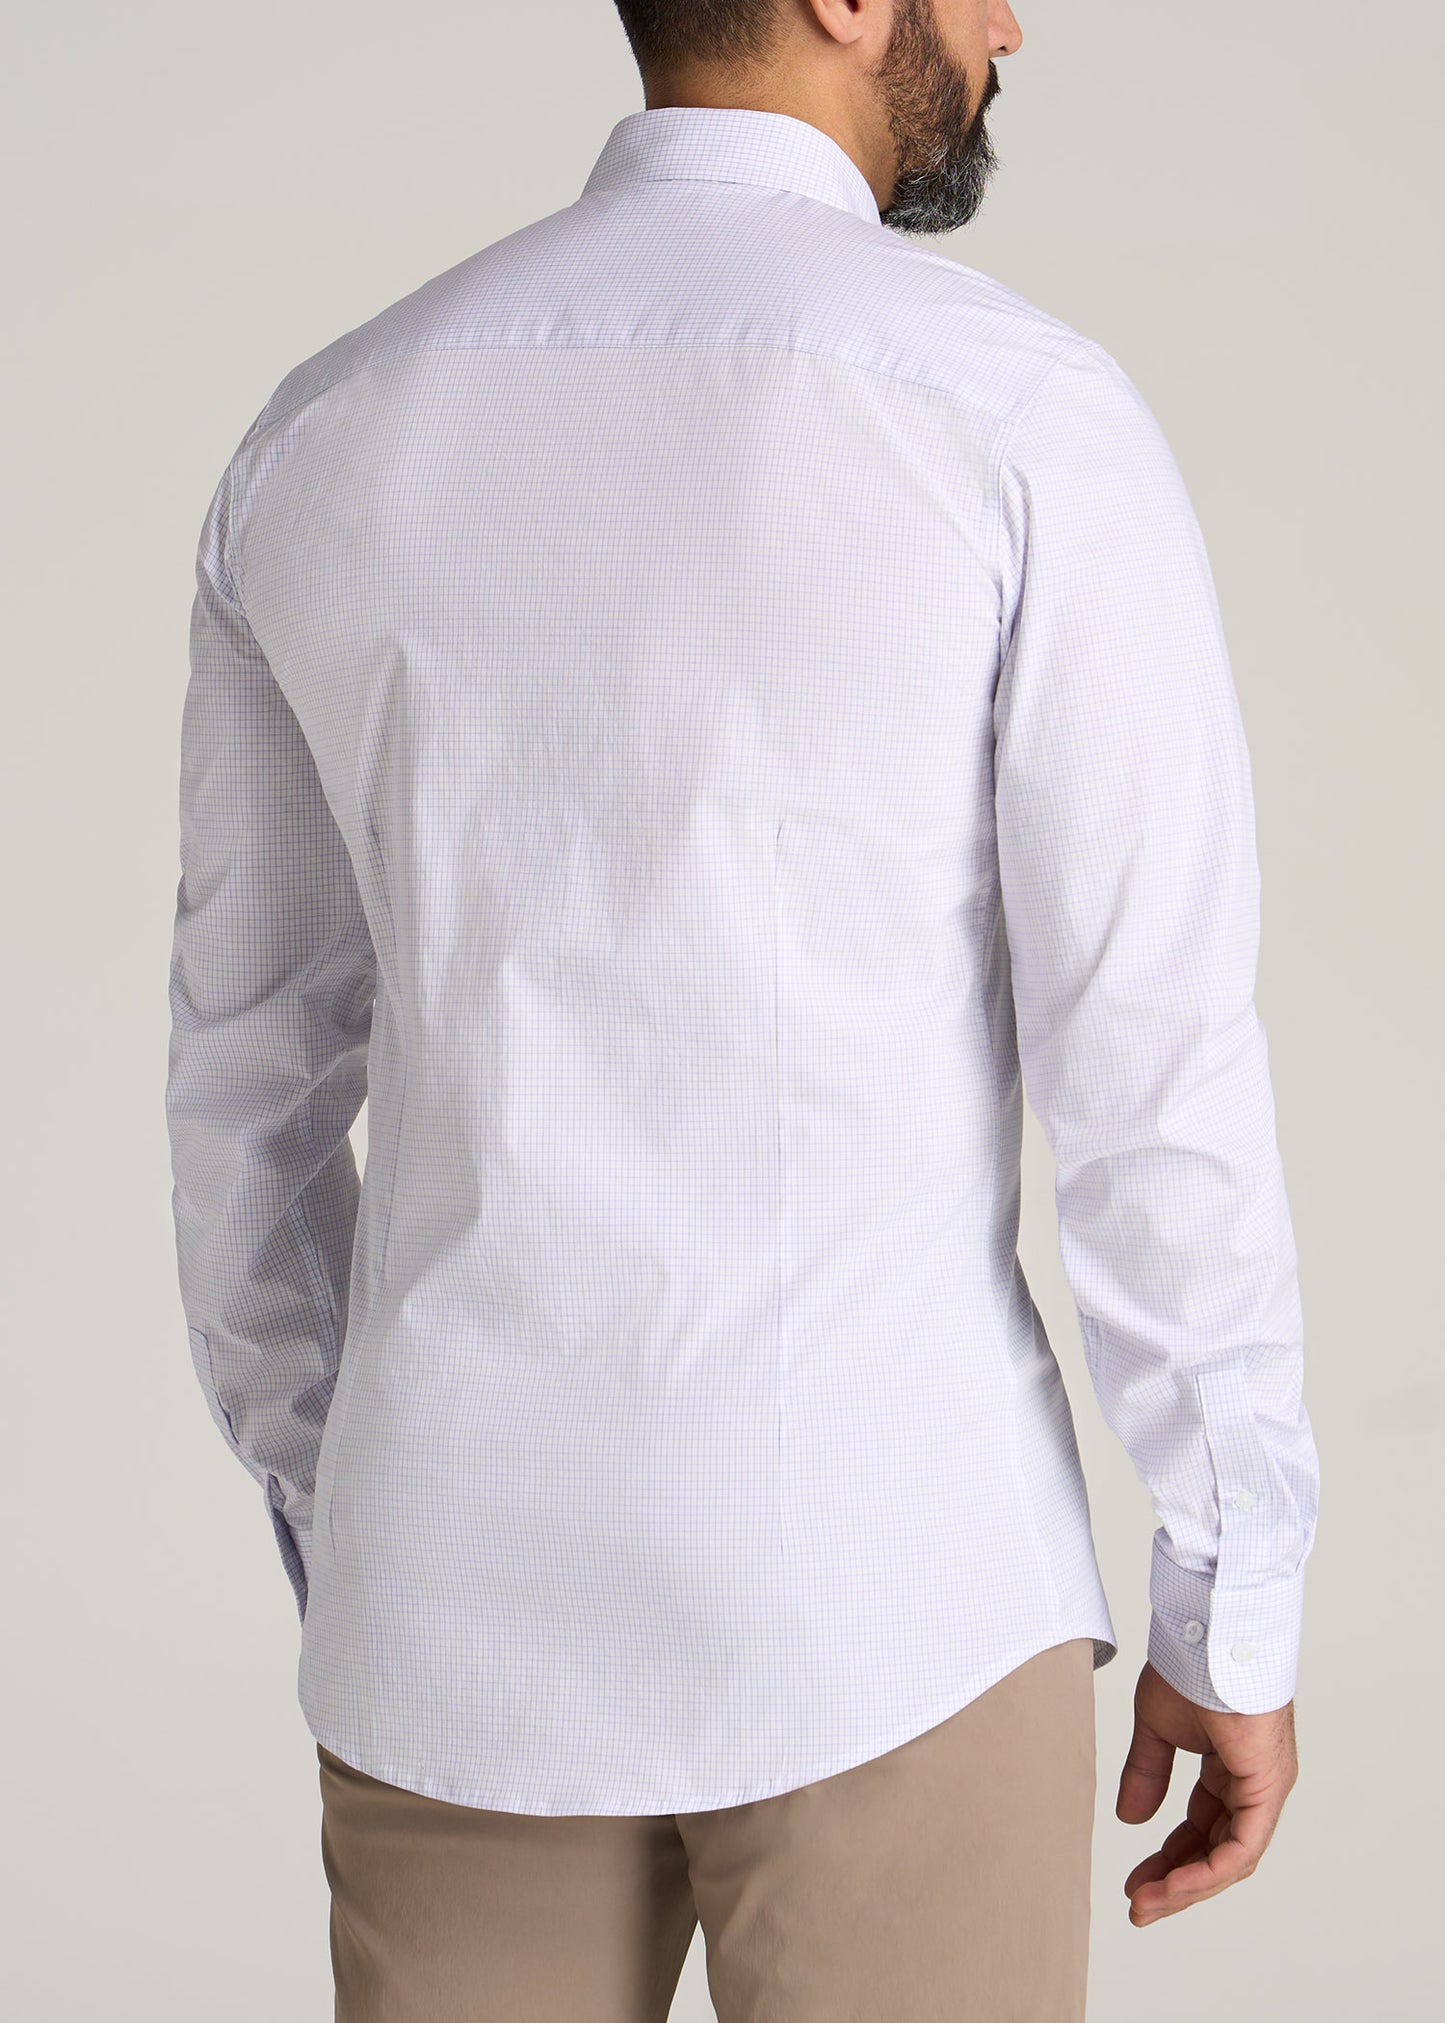 Tall Shirts Mens: Men's Tall Oskar Dress Shirts Iris Mini Check